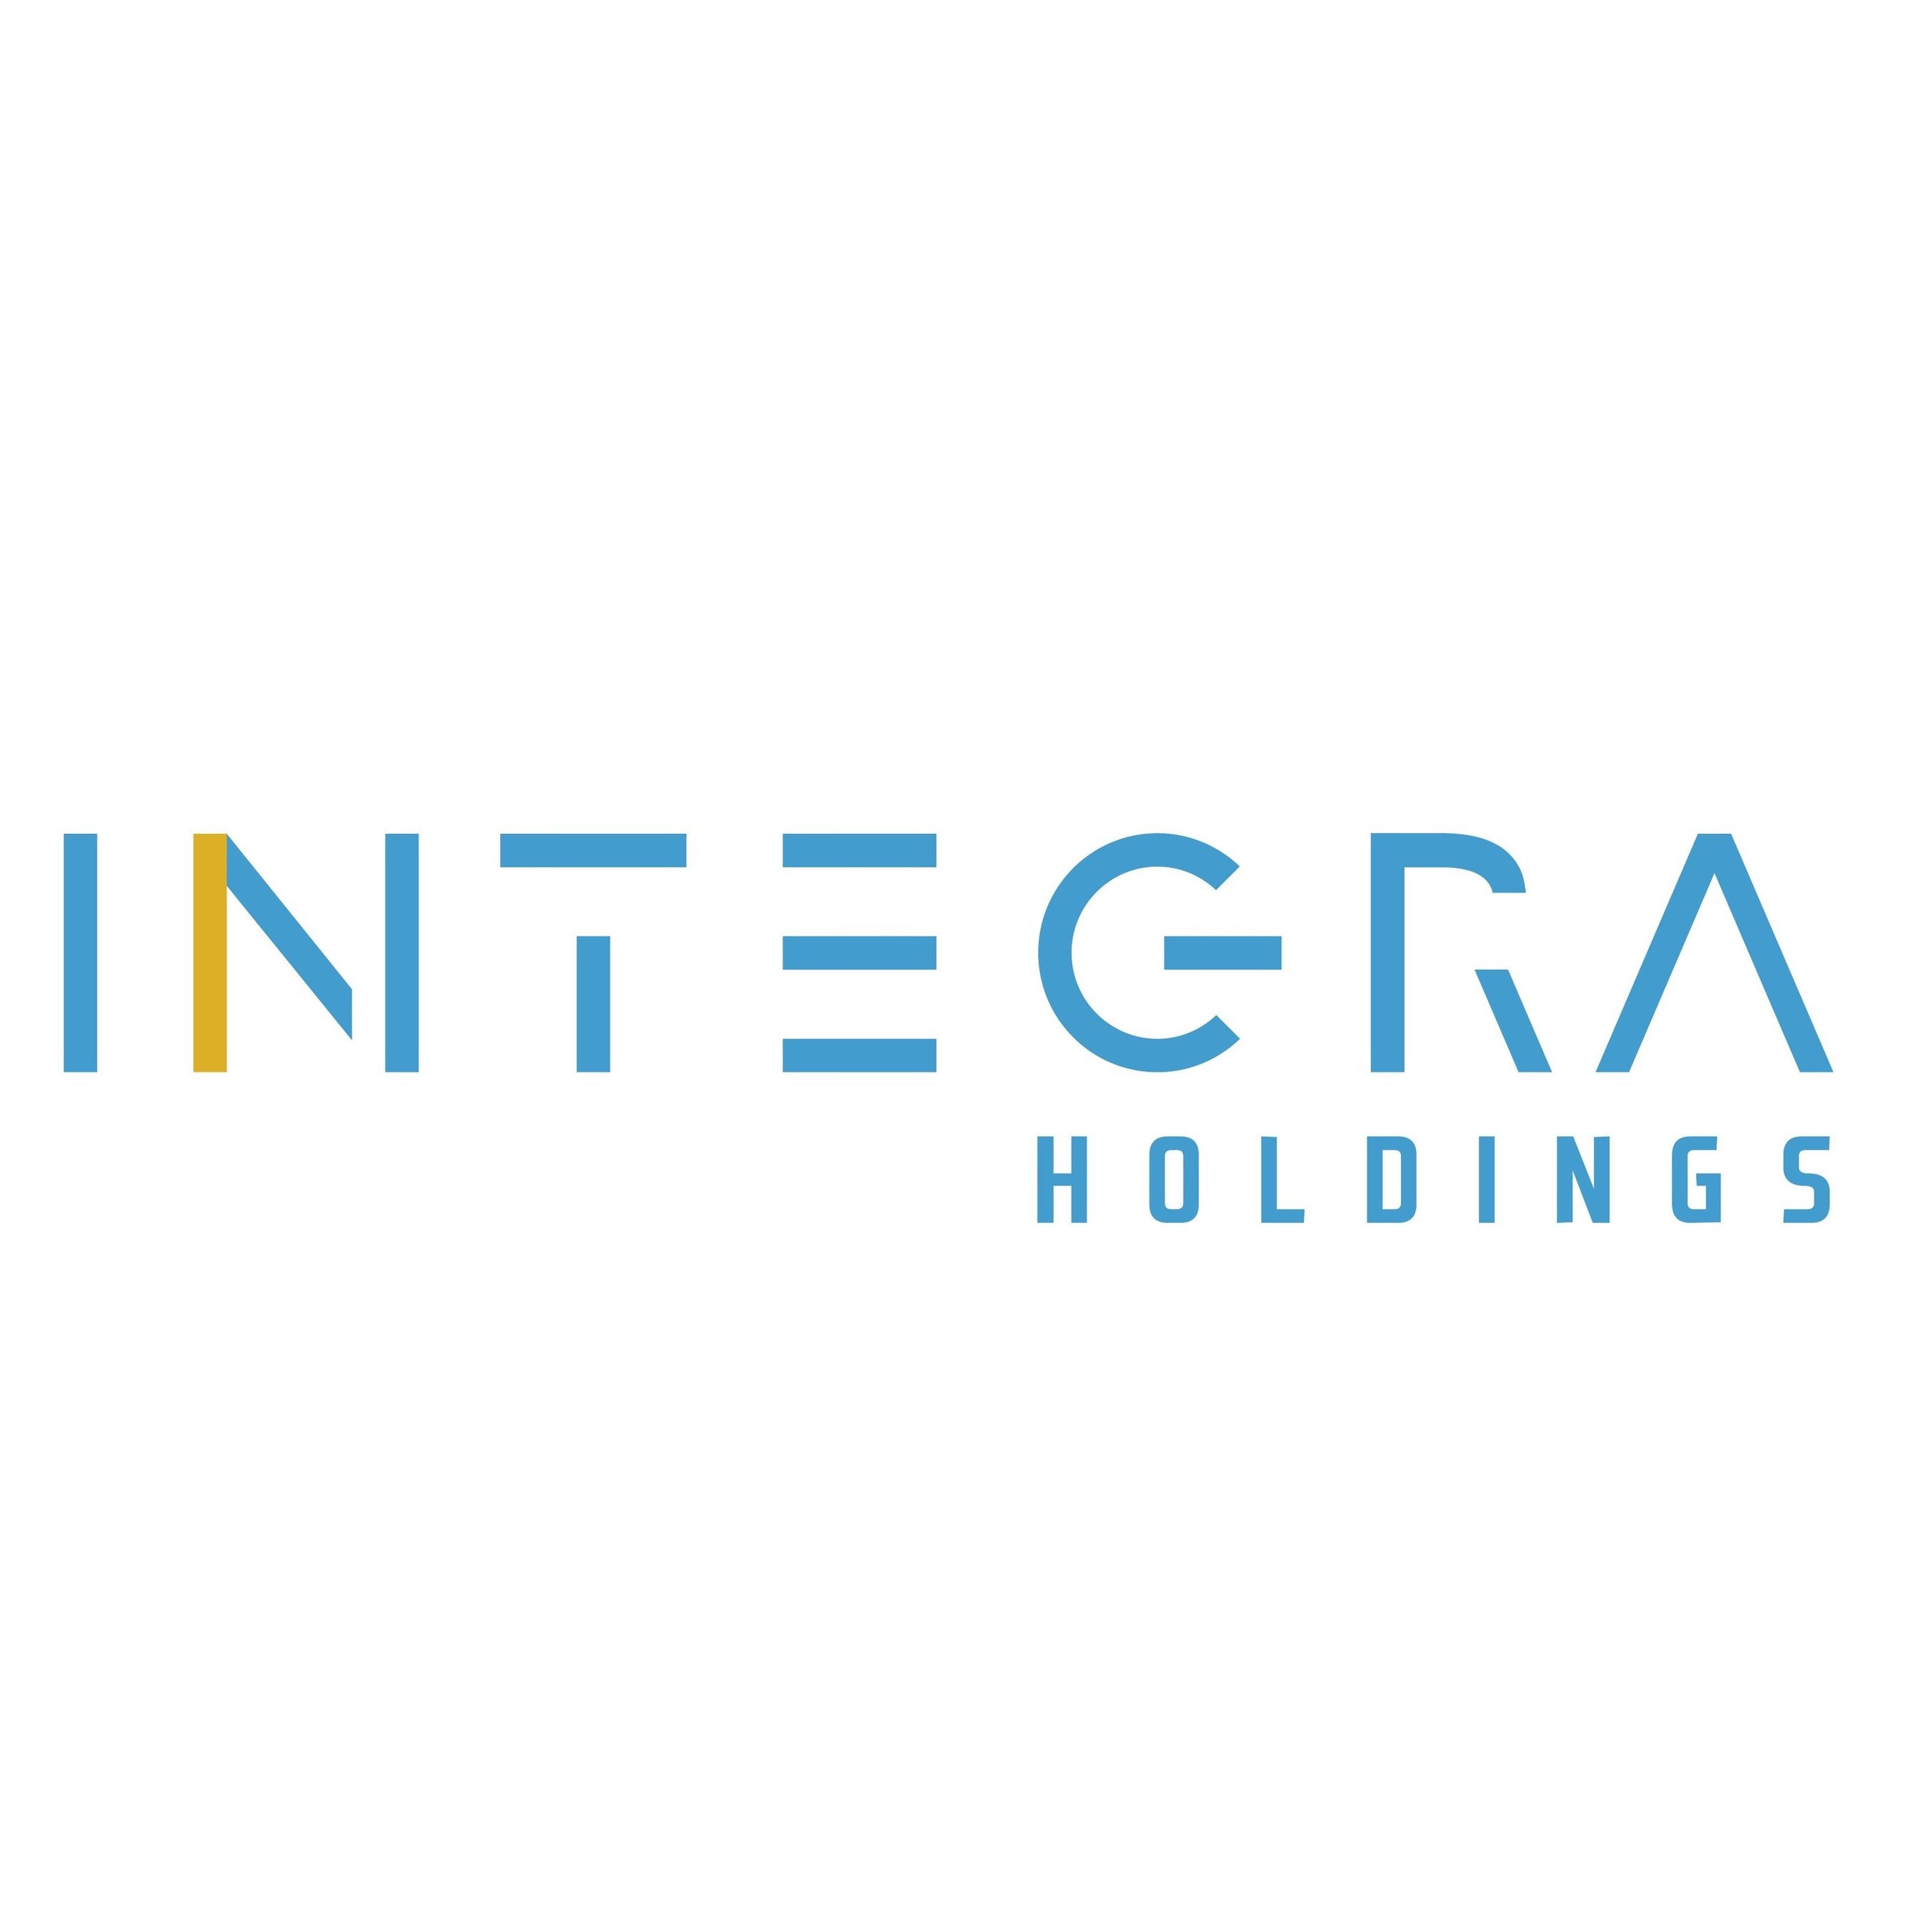 Integra Holdings